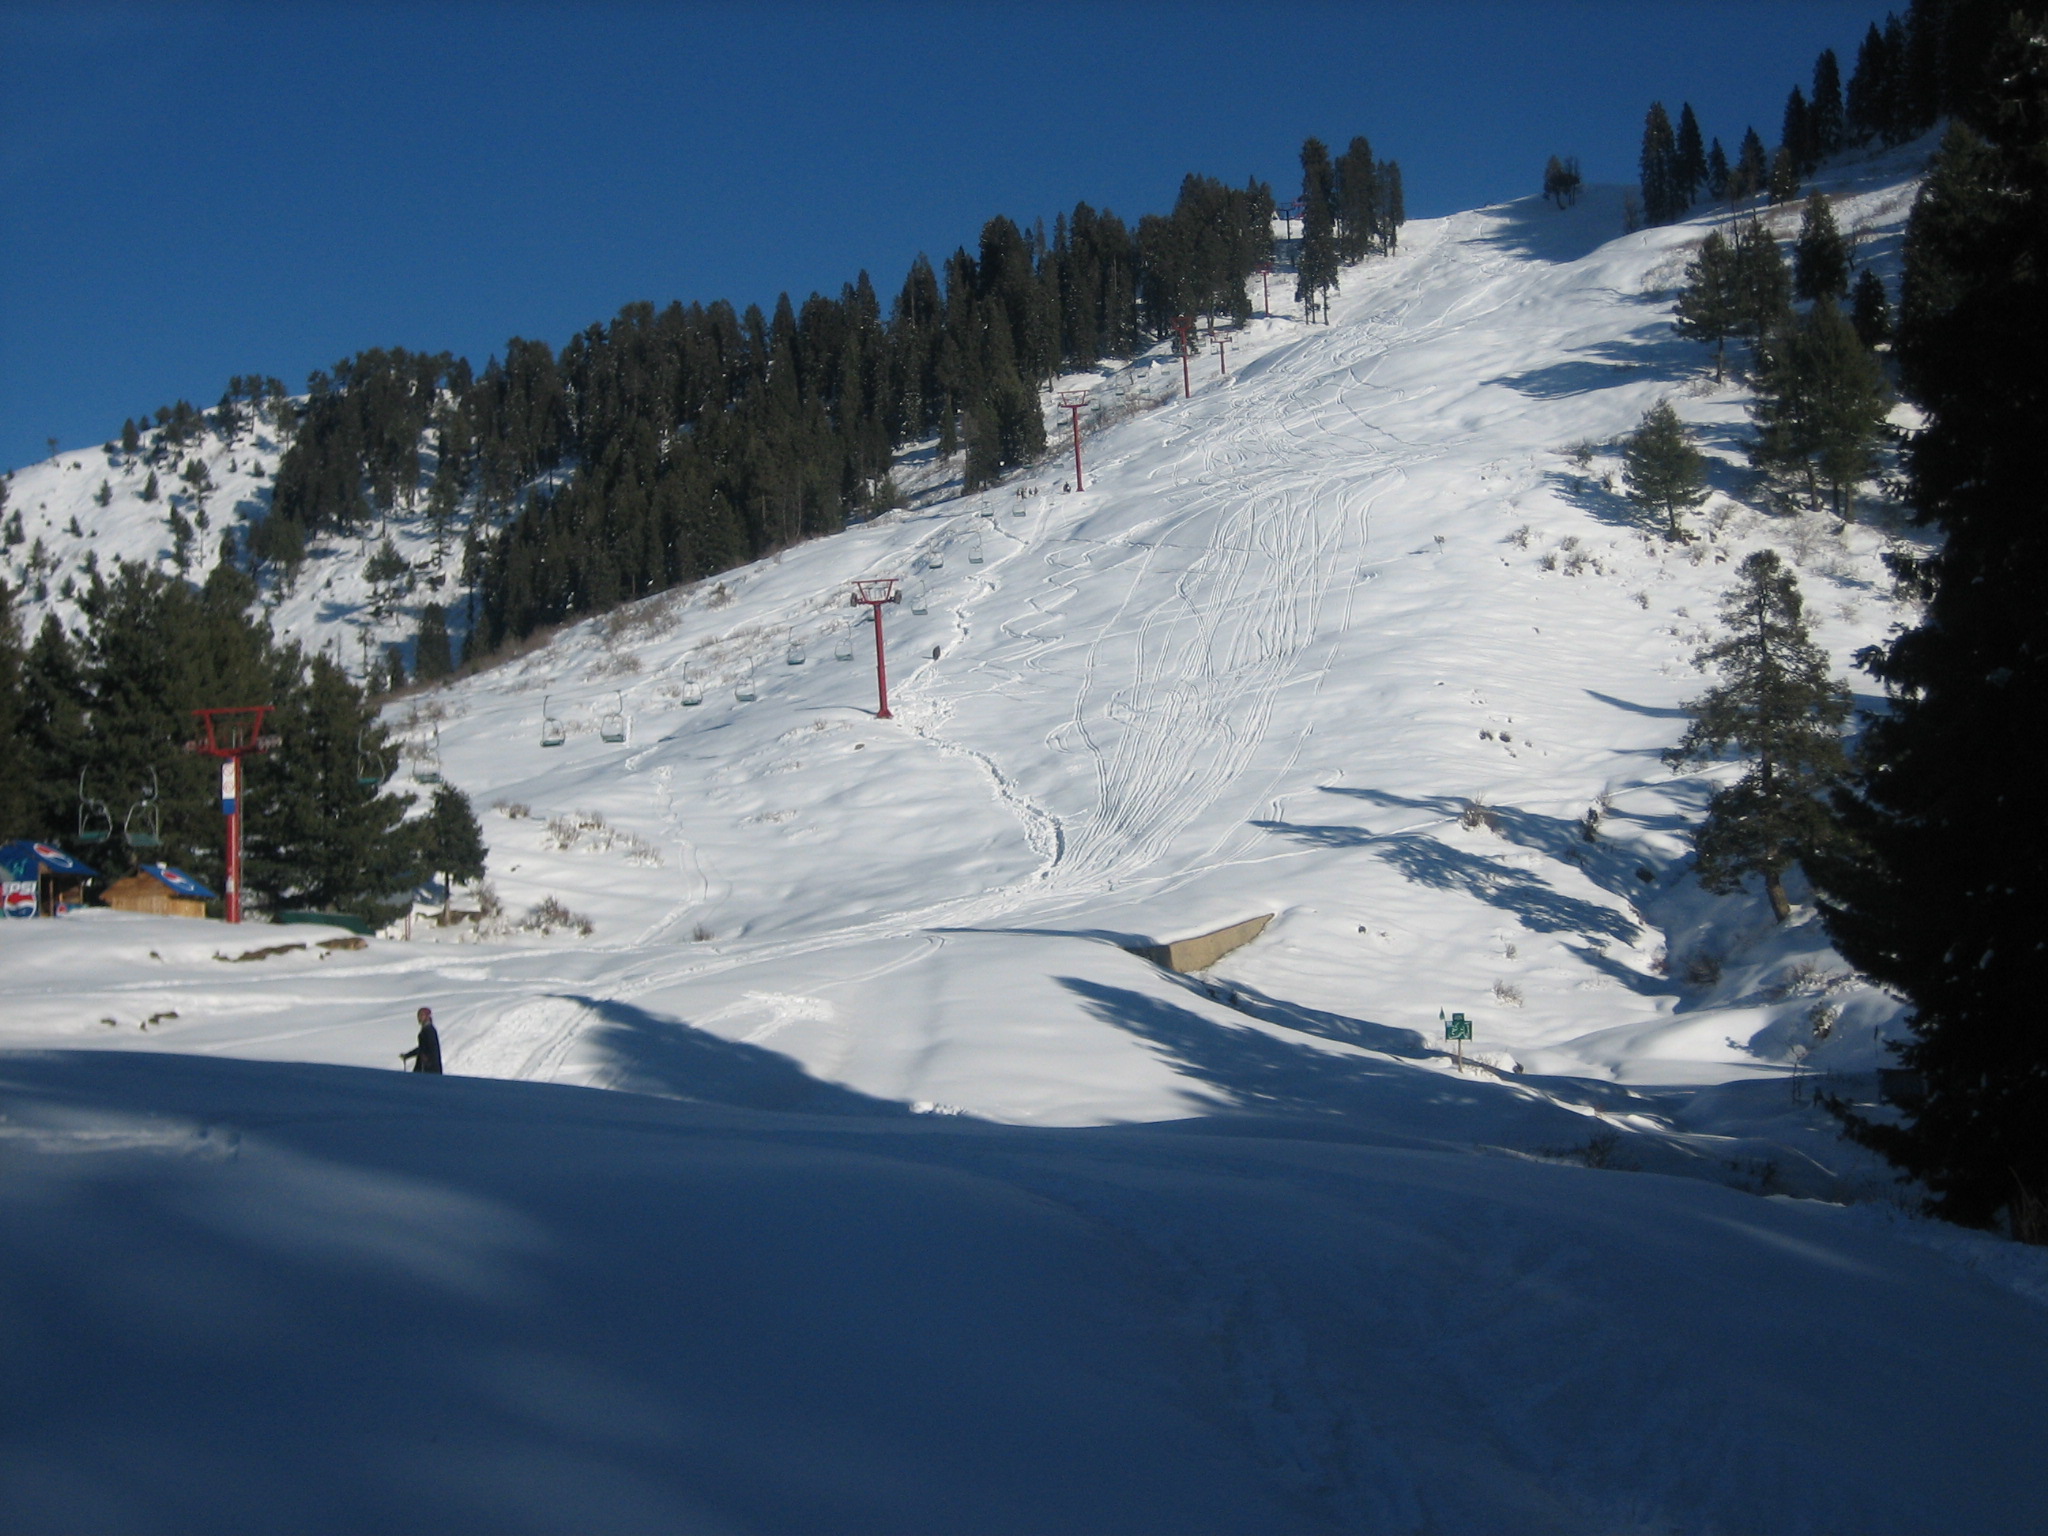 Malam Jabba skiing track by Emran Ashraf